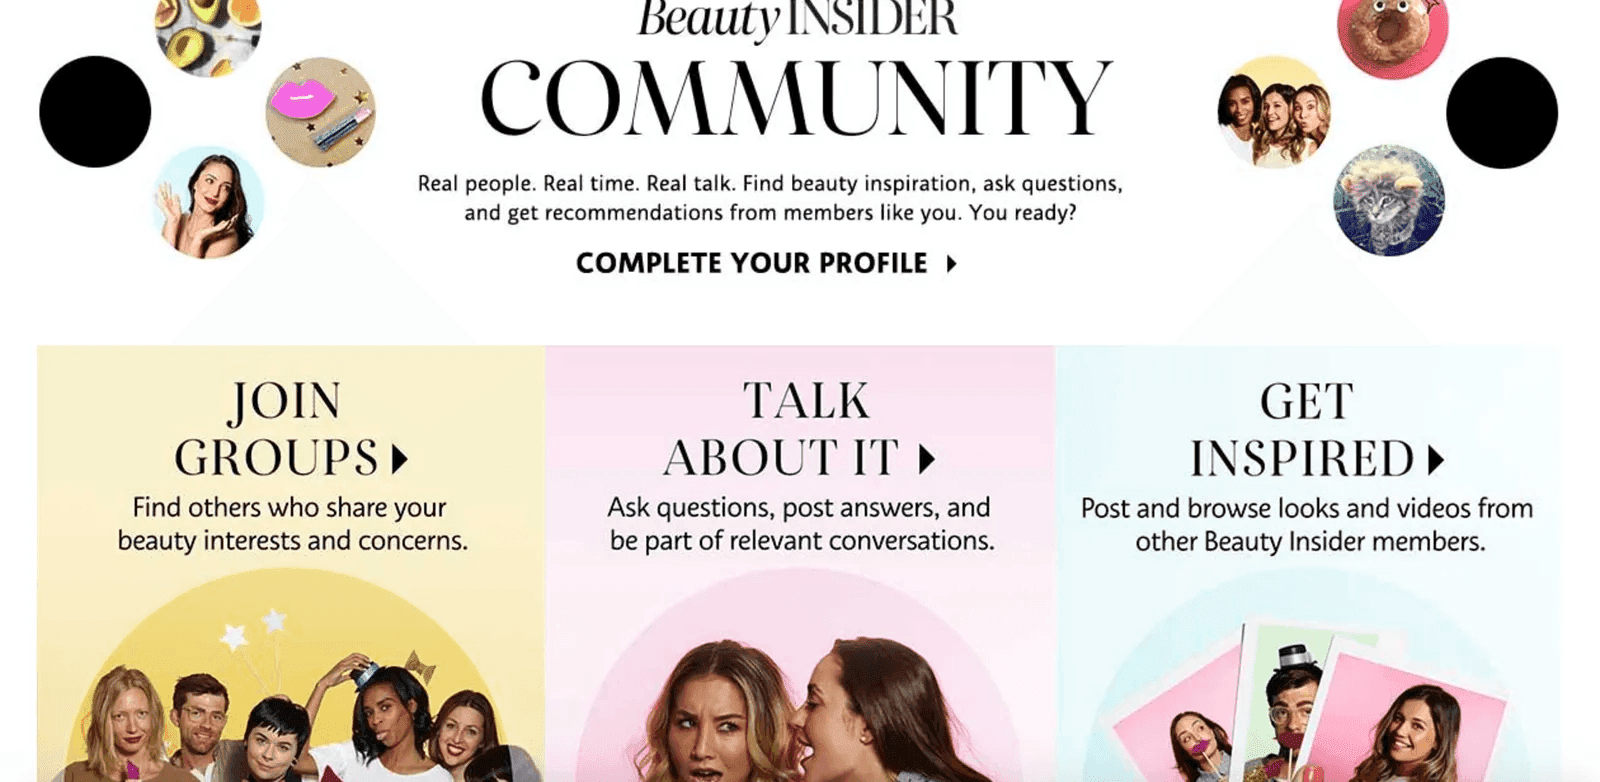 Beauty Insider Community webpage